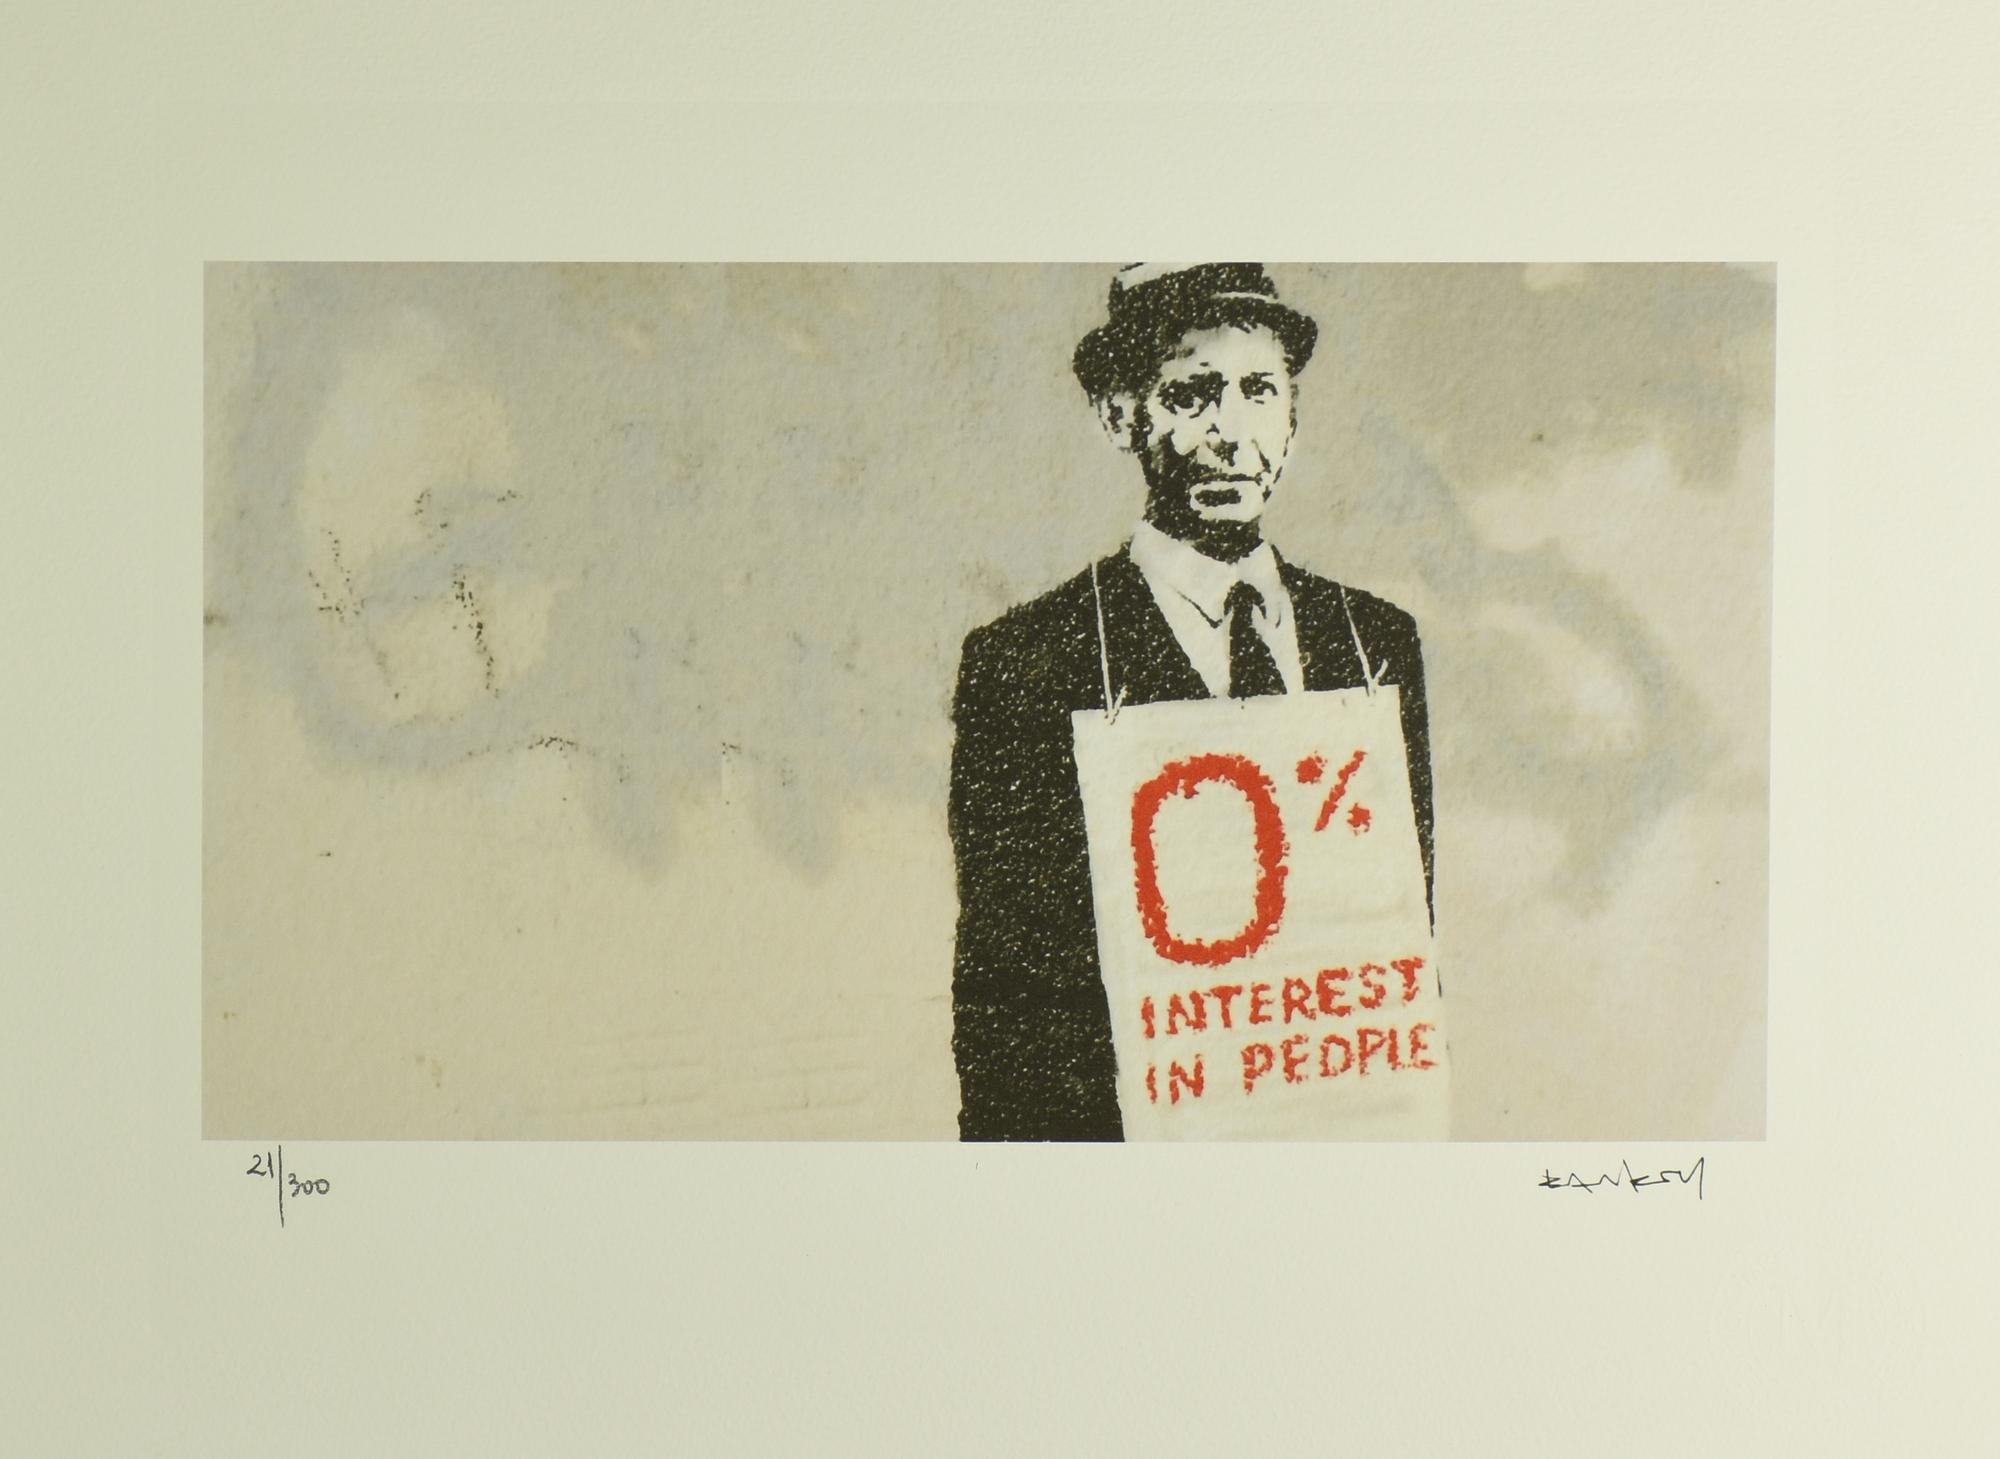 Da Banksy 0% INTEREST IN PEOPLE eliografia su carta Arches, cm 28,5x38,5; es....